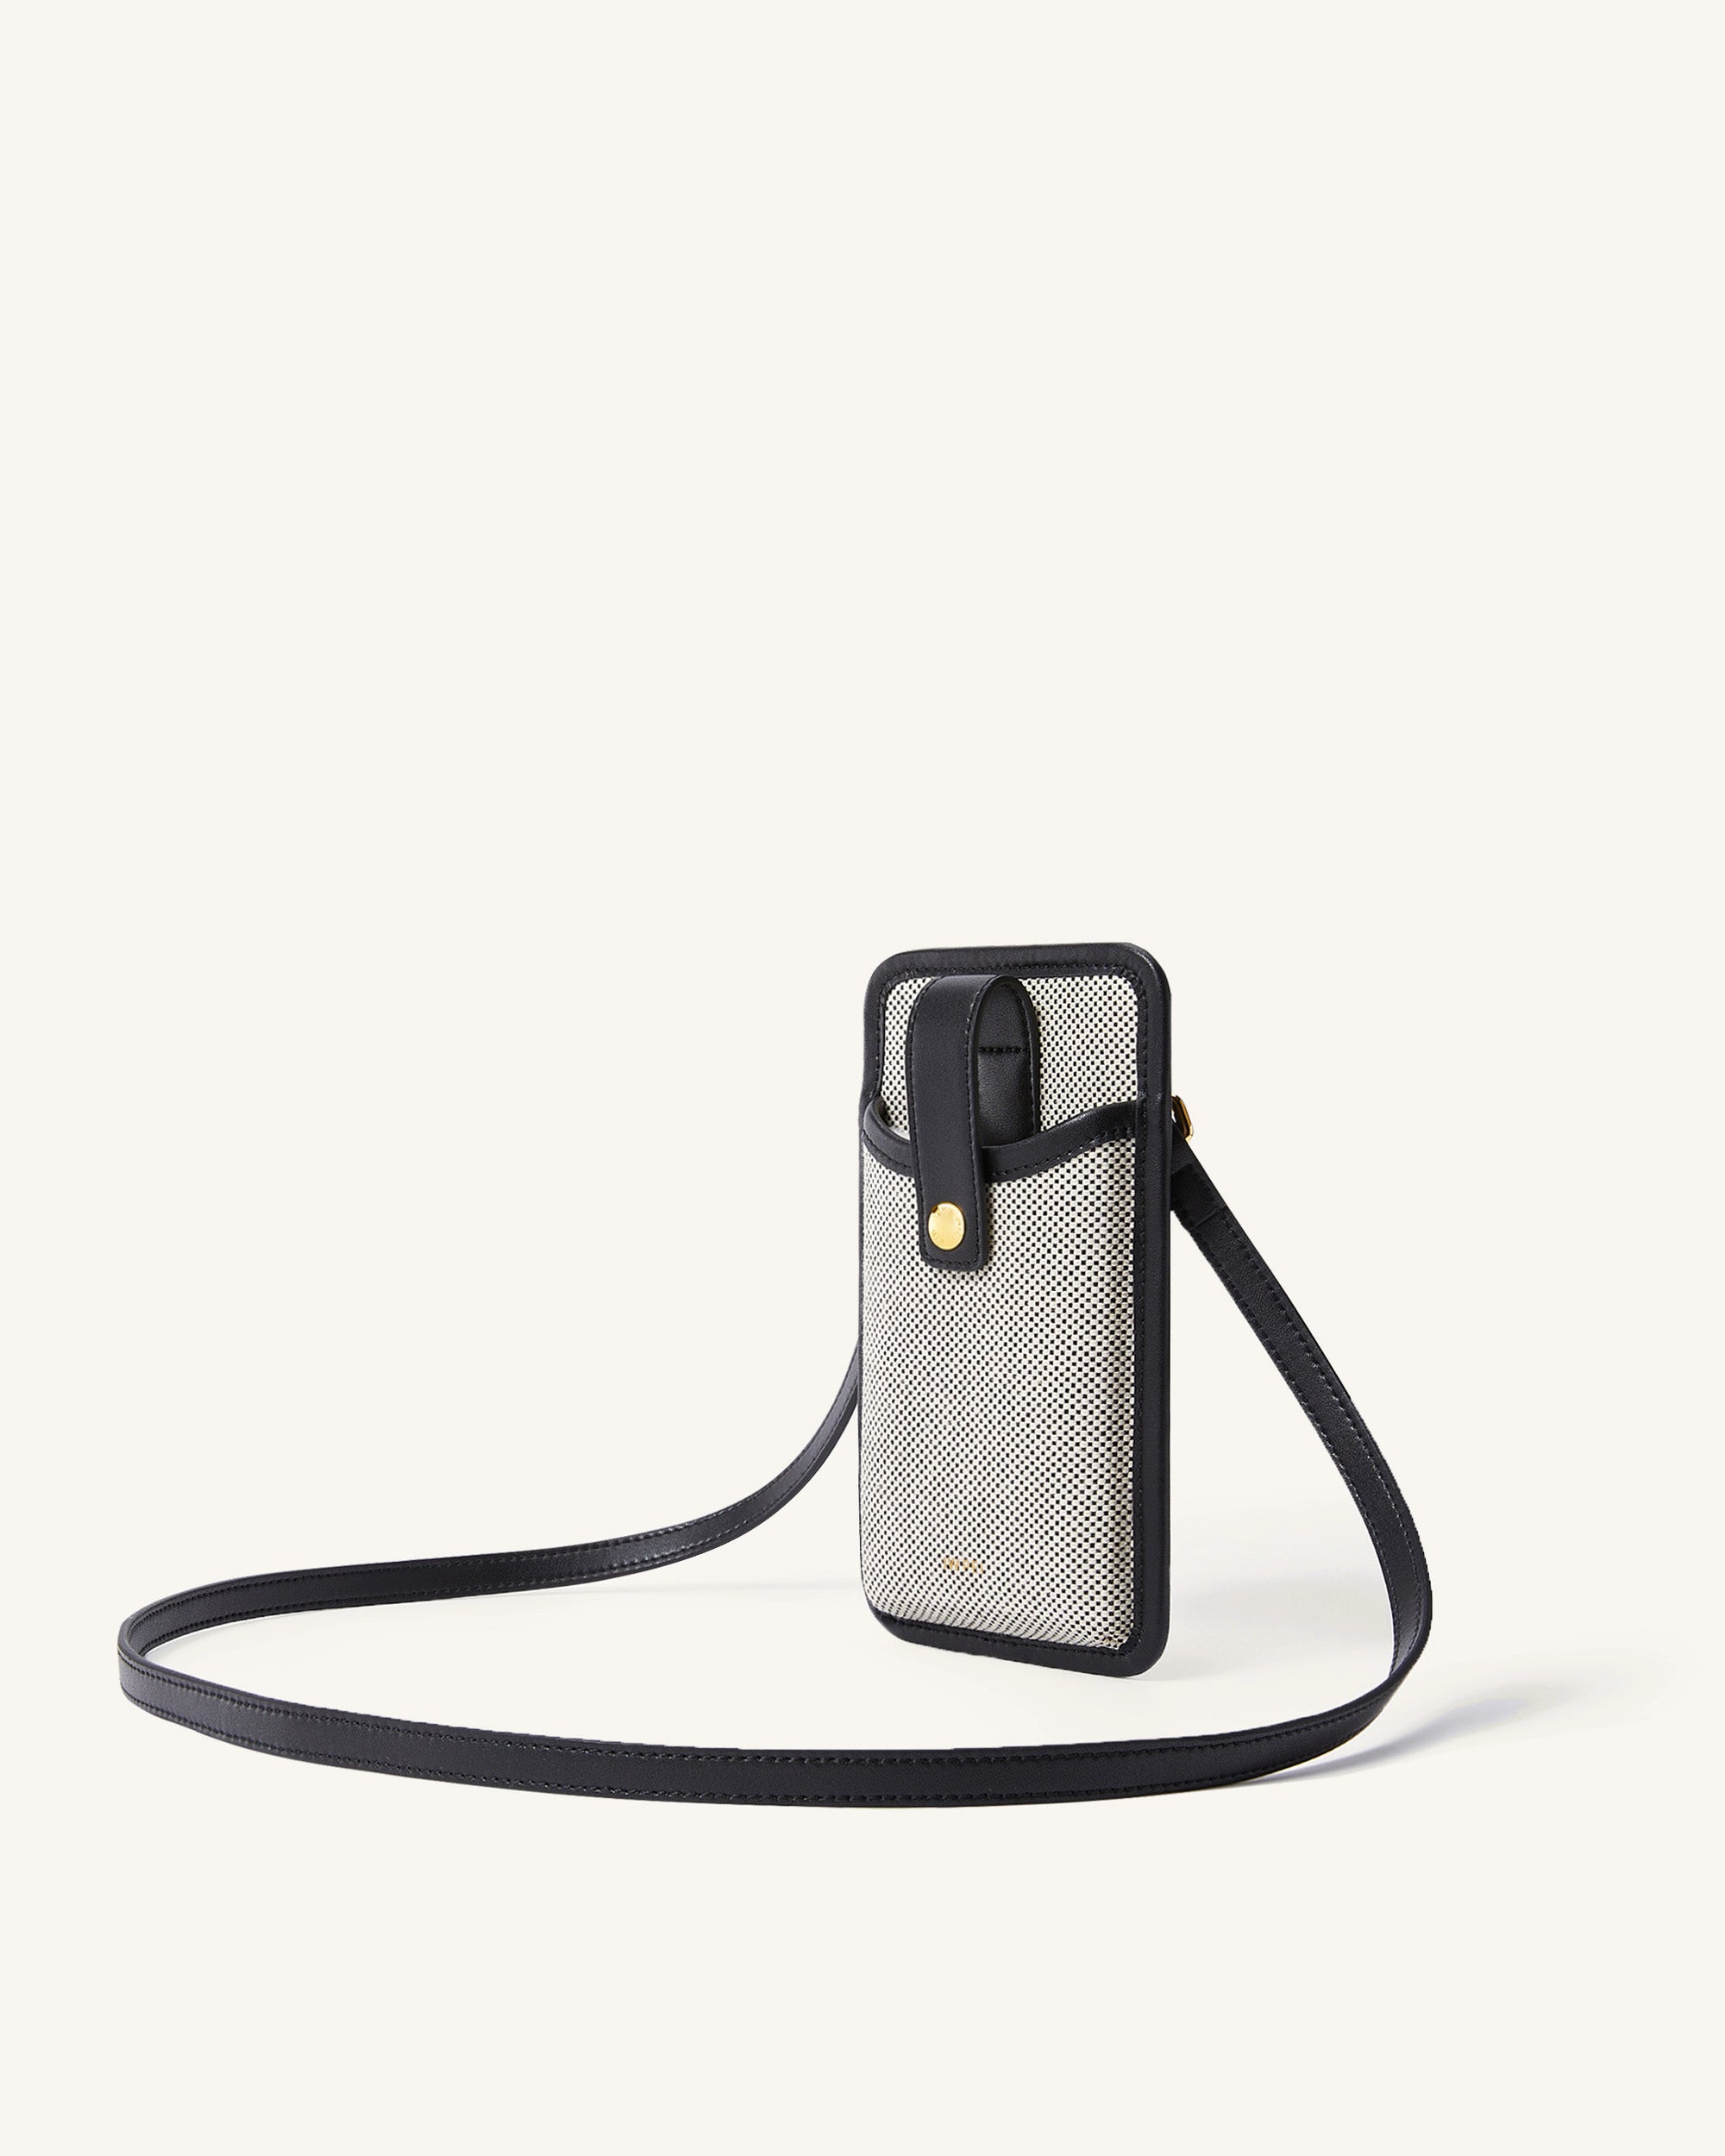 Louis Vuitton Cell Phone Case Switzerland, SAVE 43